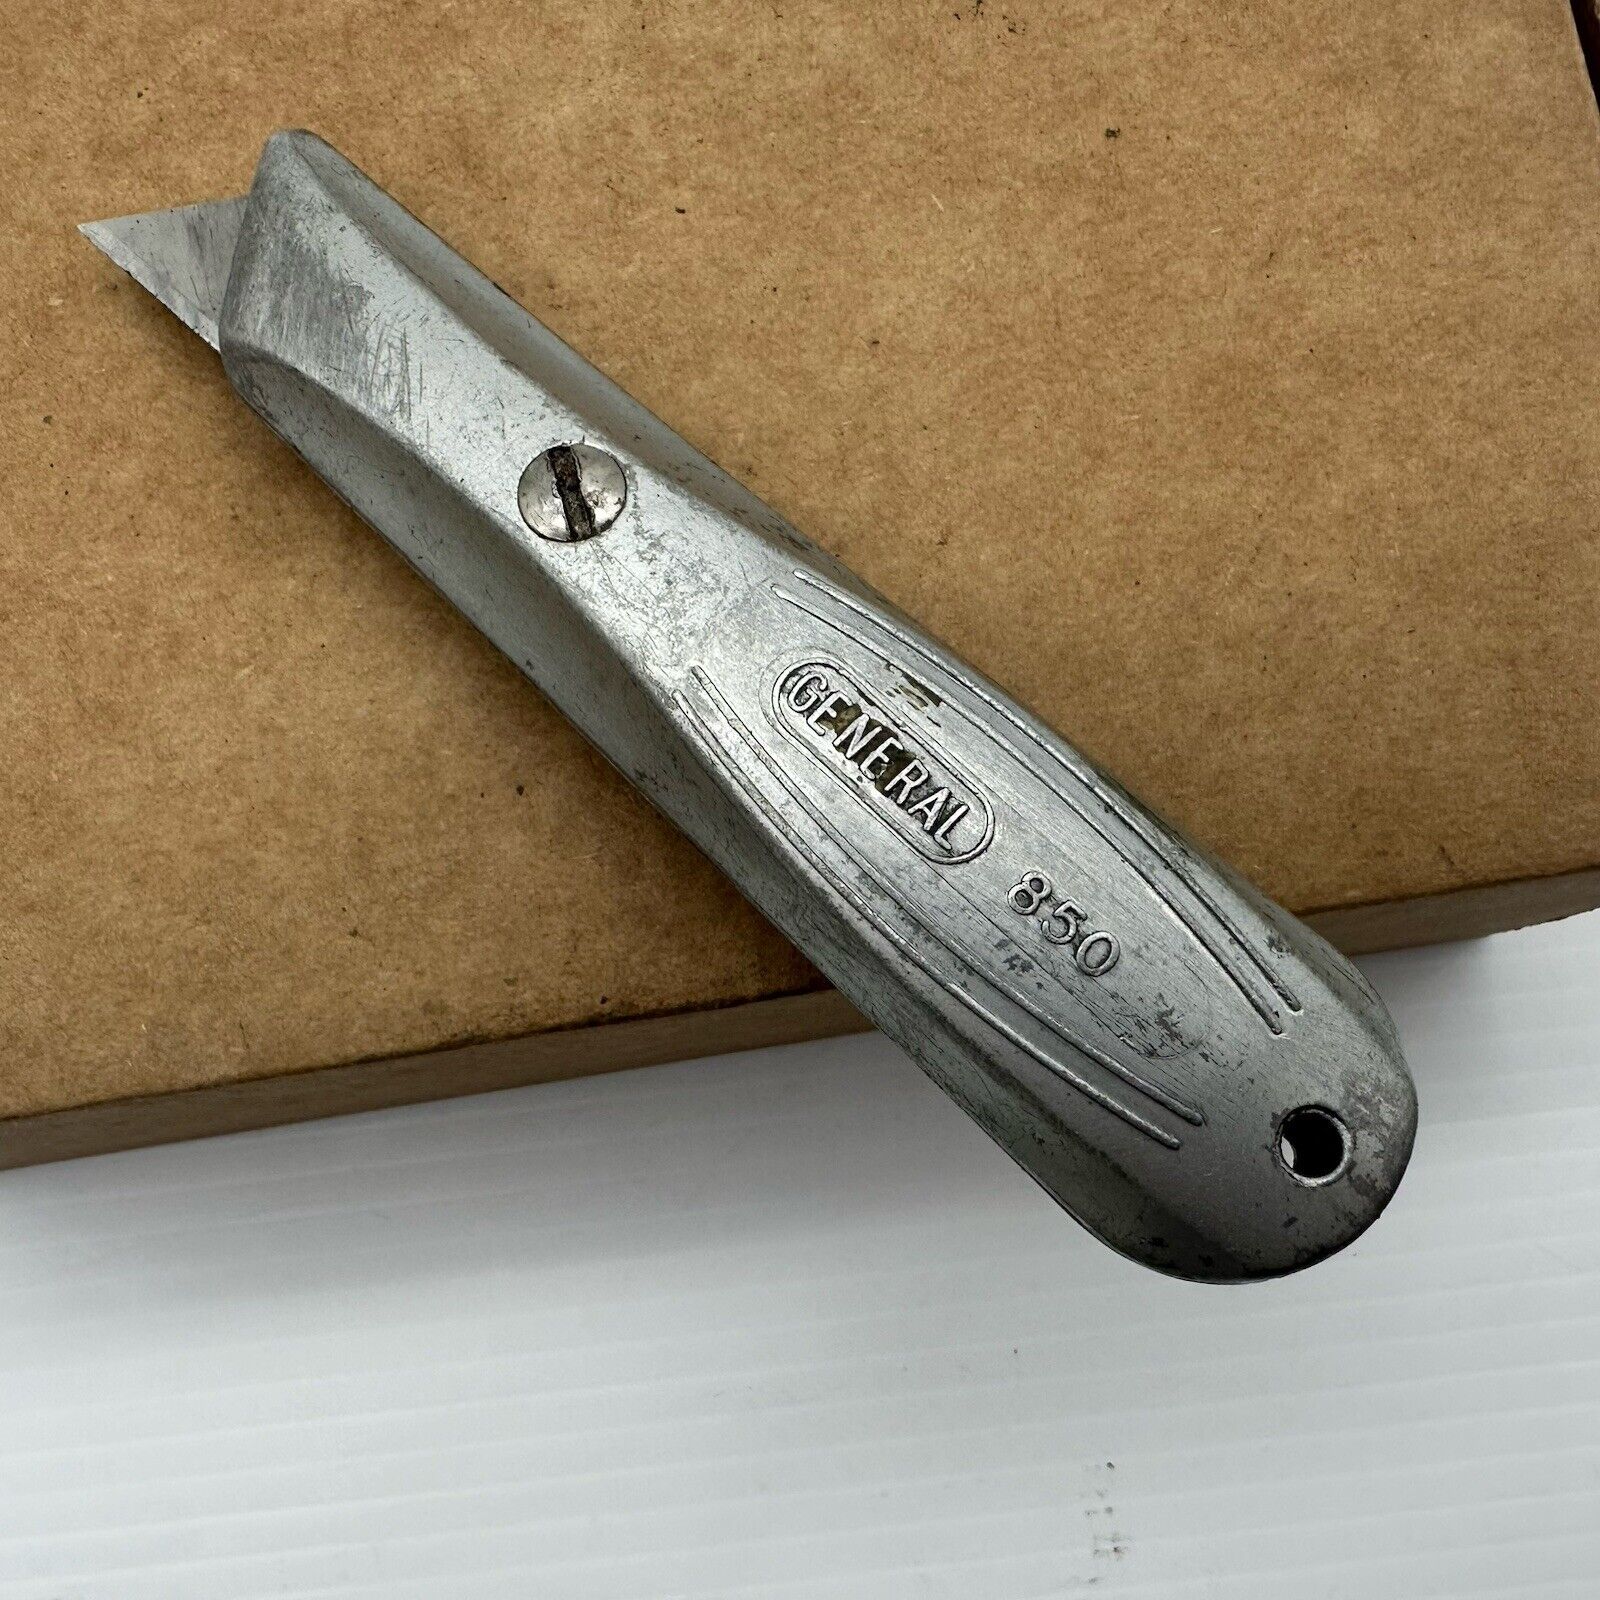 Vintage General 850 Utility Knife Razor Blade Holder Tool Made in USA